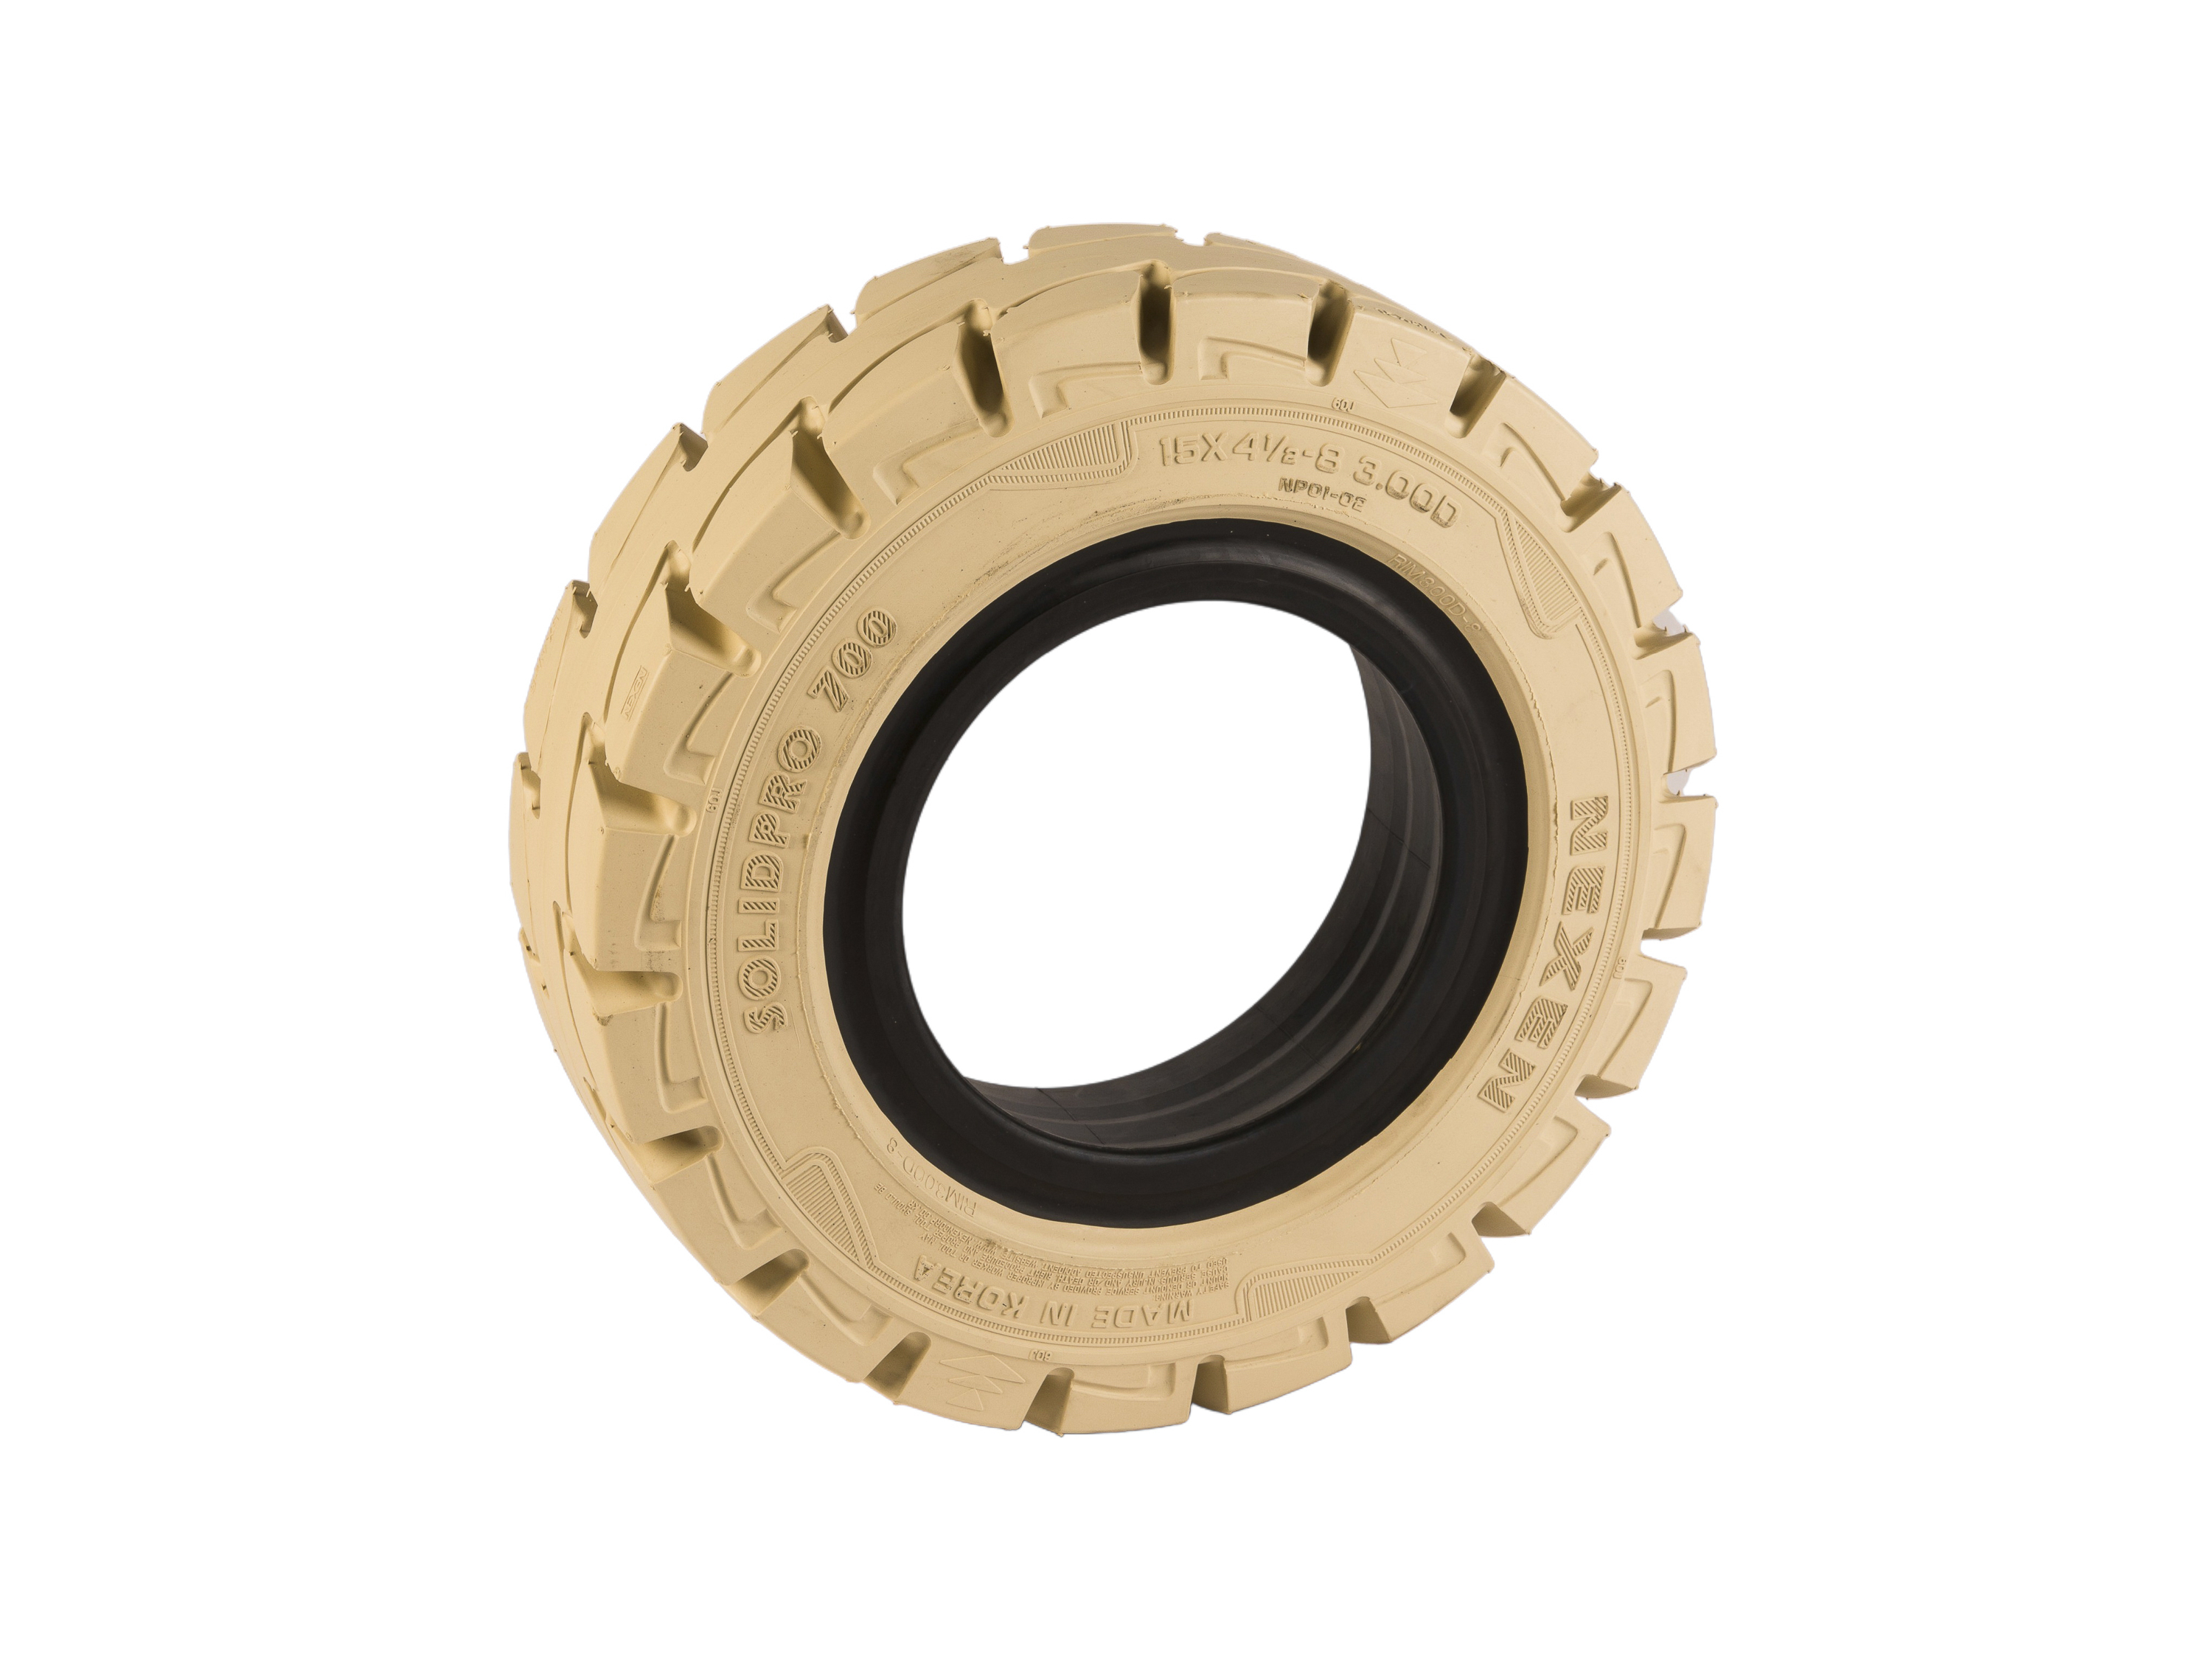 NEXEN 15x4.50-8 (125/75-8) Non-marking full rubber tire 